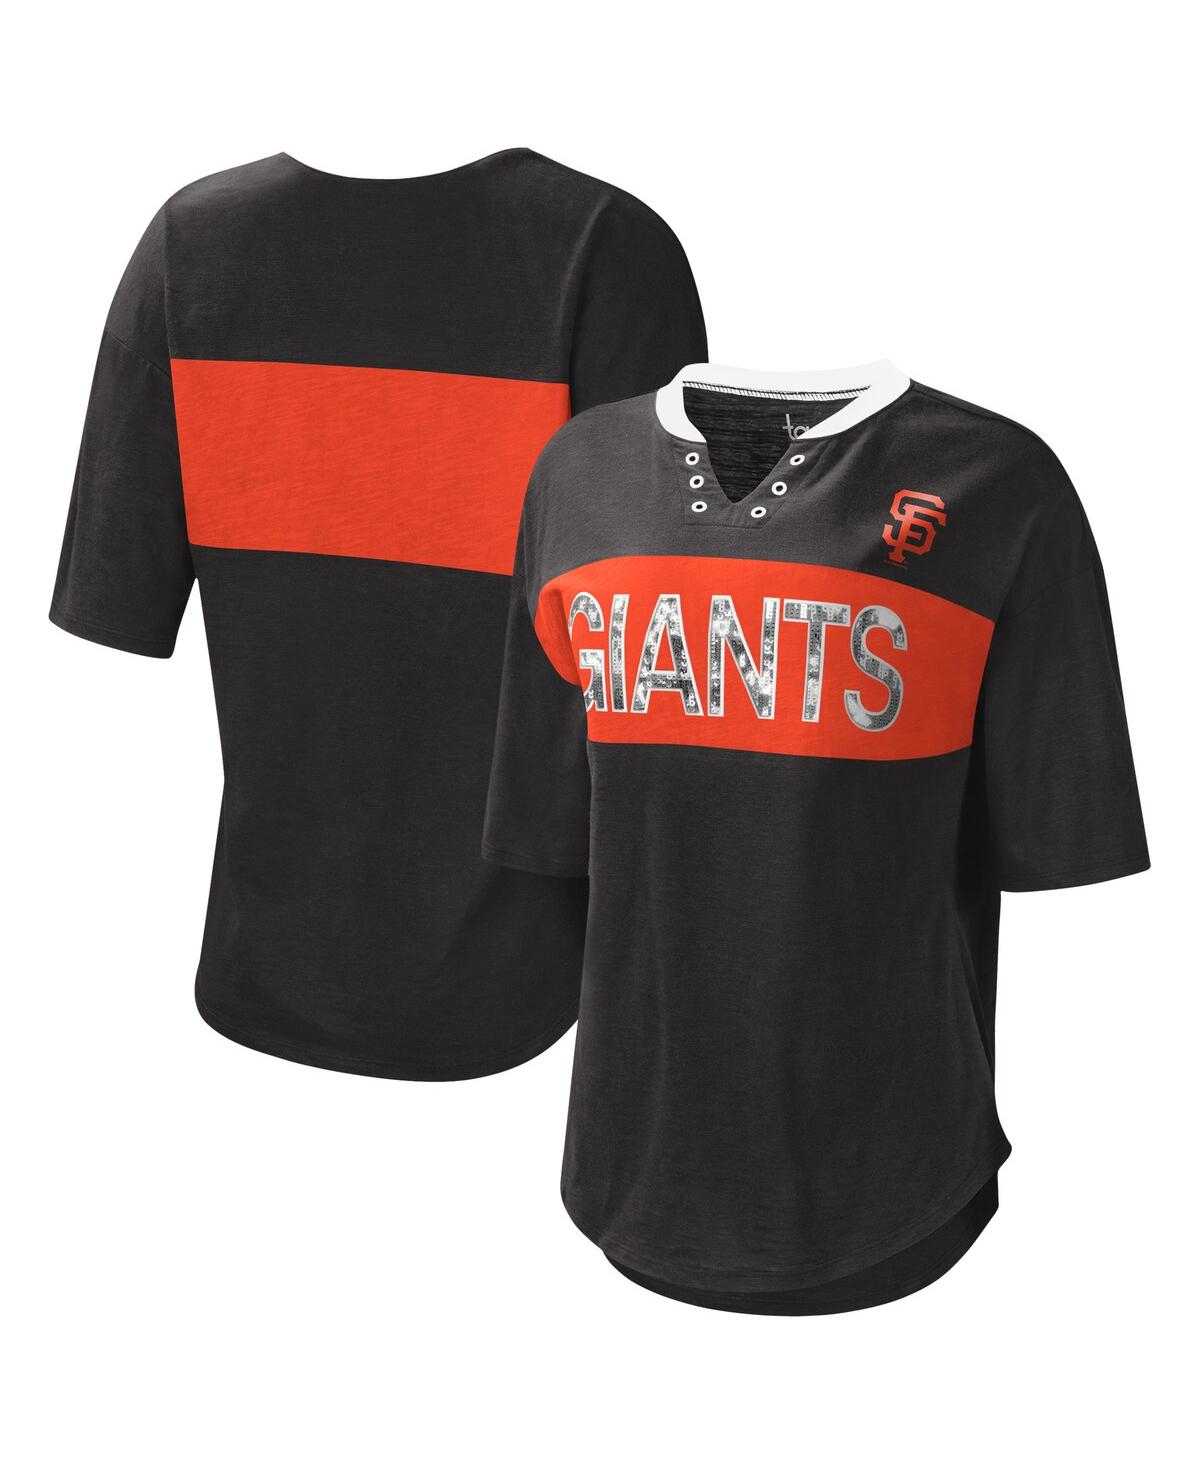 Women's Touch Black and Orange San Francisco Giants Lead Off Notch Neck T-shirt - Black, Orange